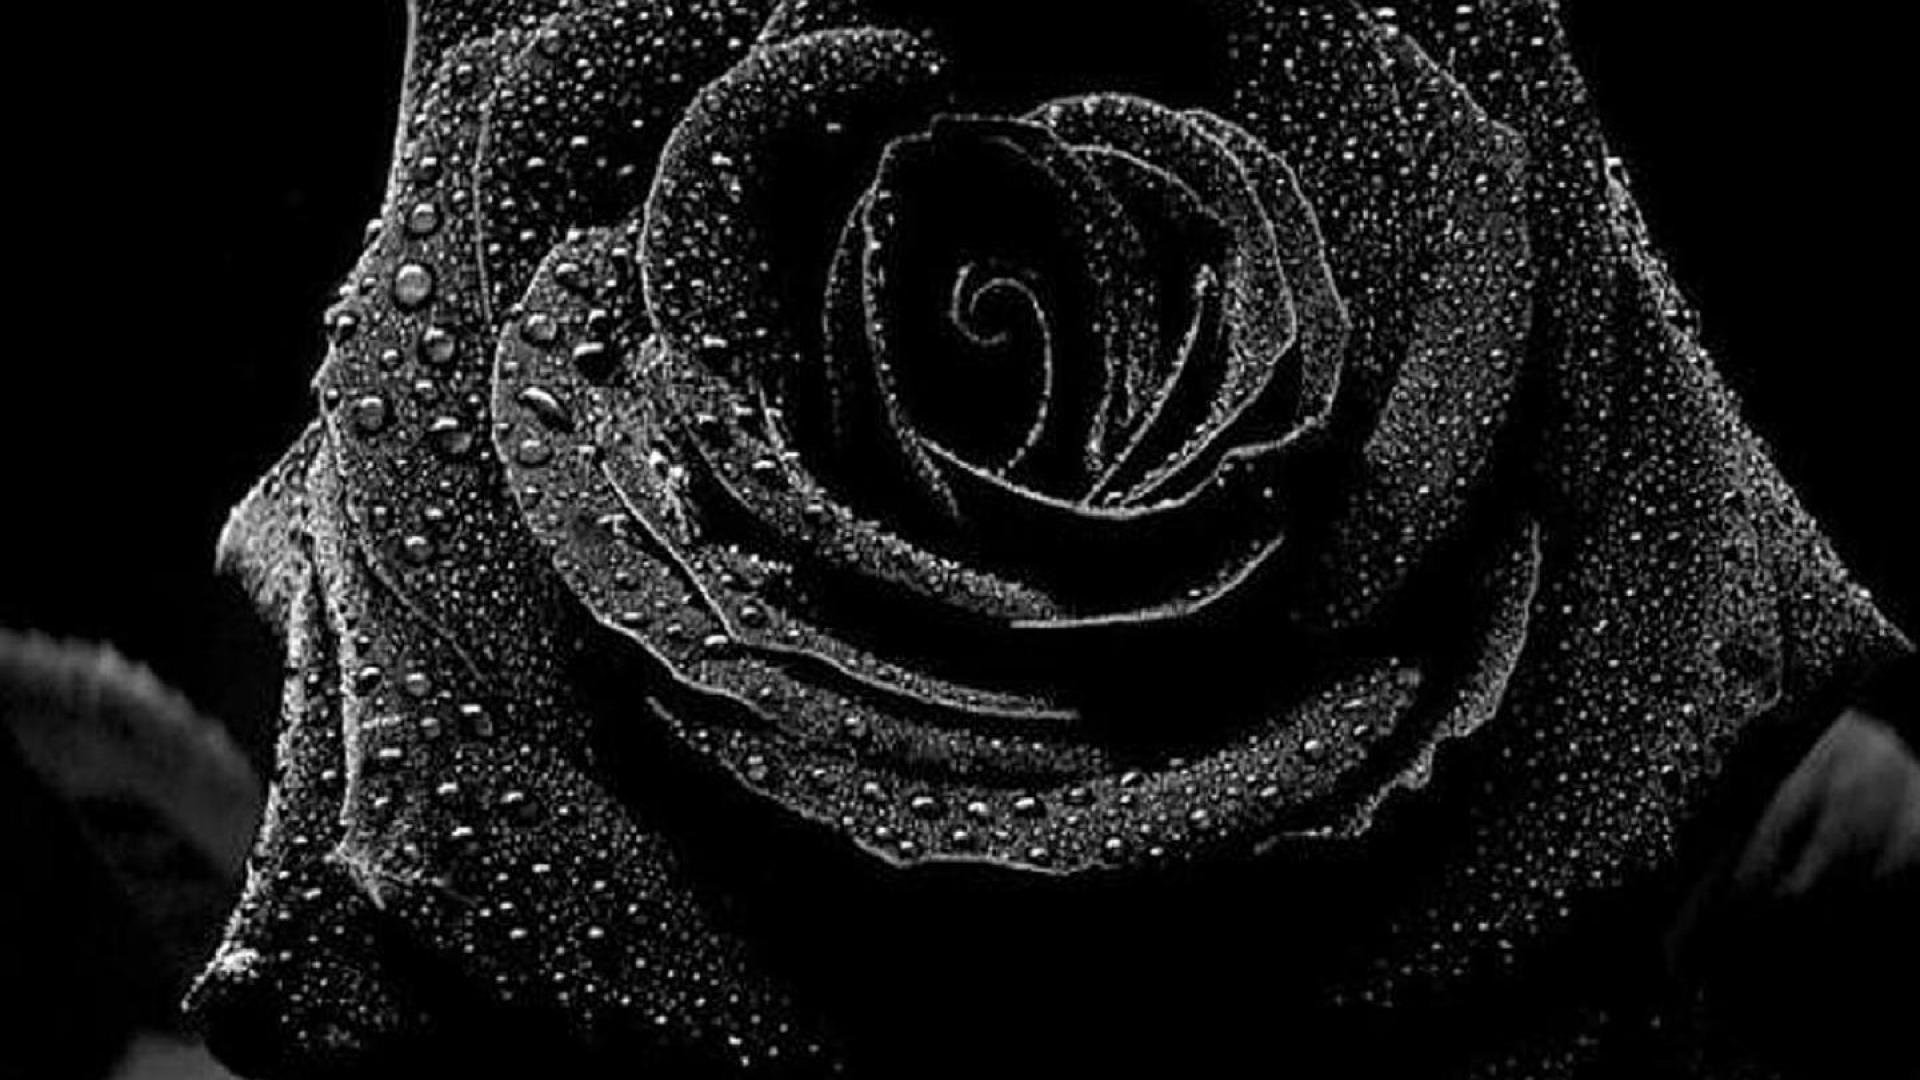 Black Rose Art IPhone Wallpaper - IPhone Wallpapers : iPhone Wallpapers |  Black and white wallpaper iphone, Black flowers wallpaper, White wallpaper  for iphone